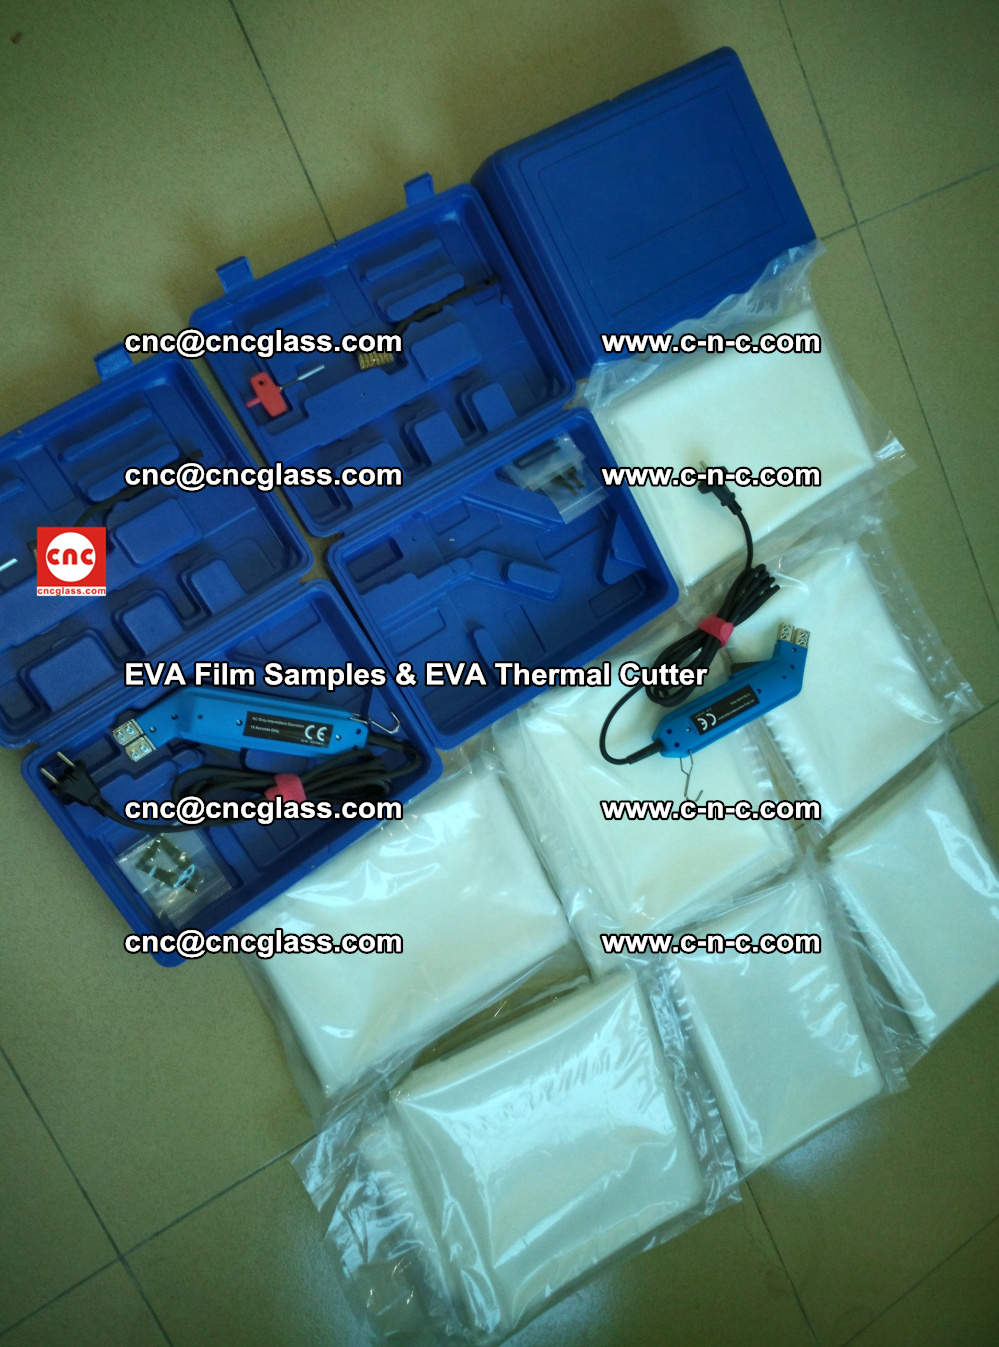 EVAFORCE SUPER CLEAR EVA Film Samples and EVA Thermal Cutter (14)